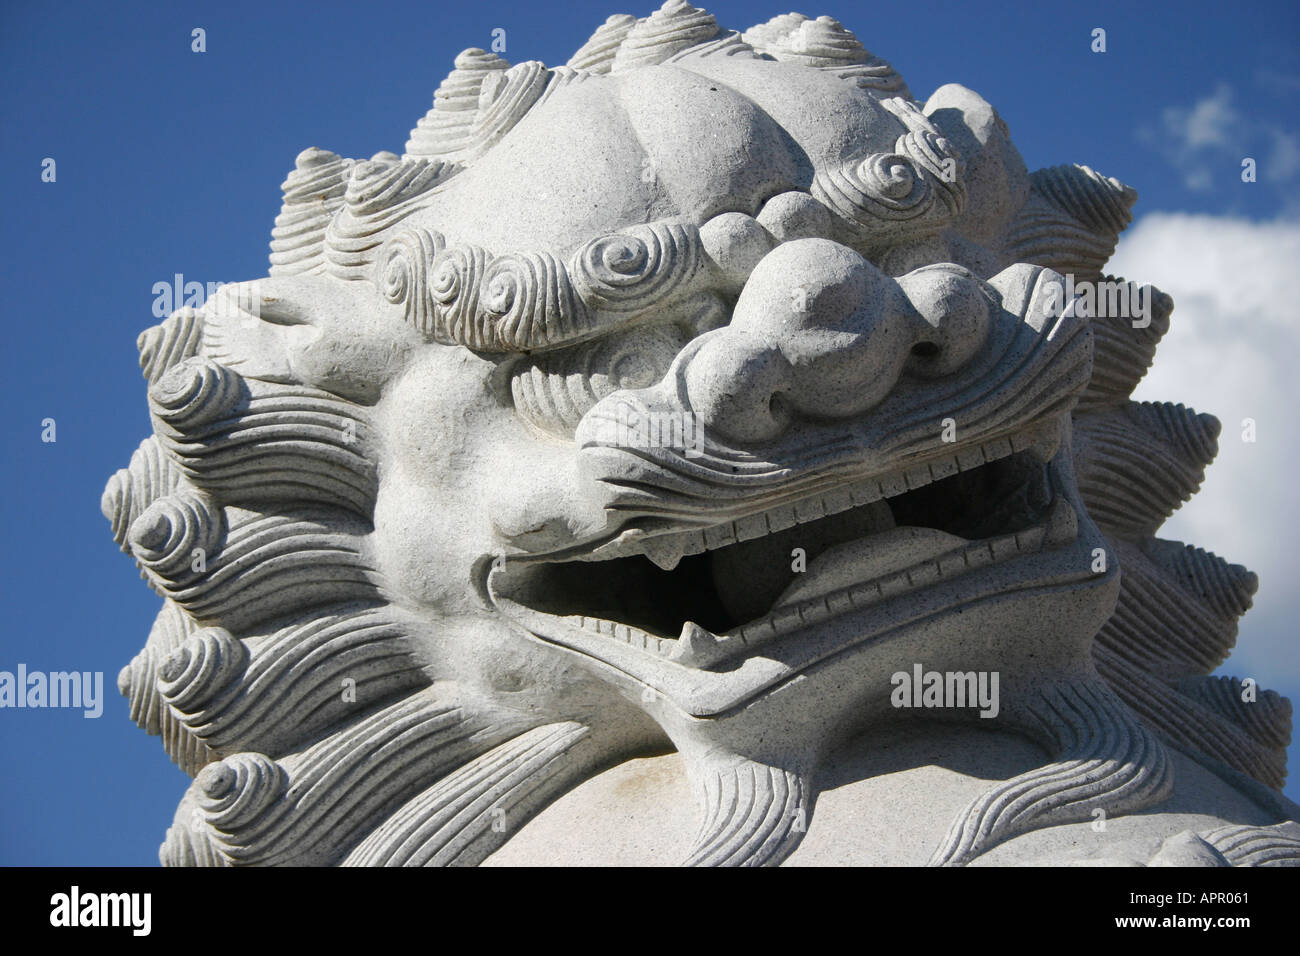 Head of chinese dragon statue Stock Photo - Alamy